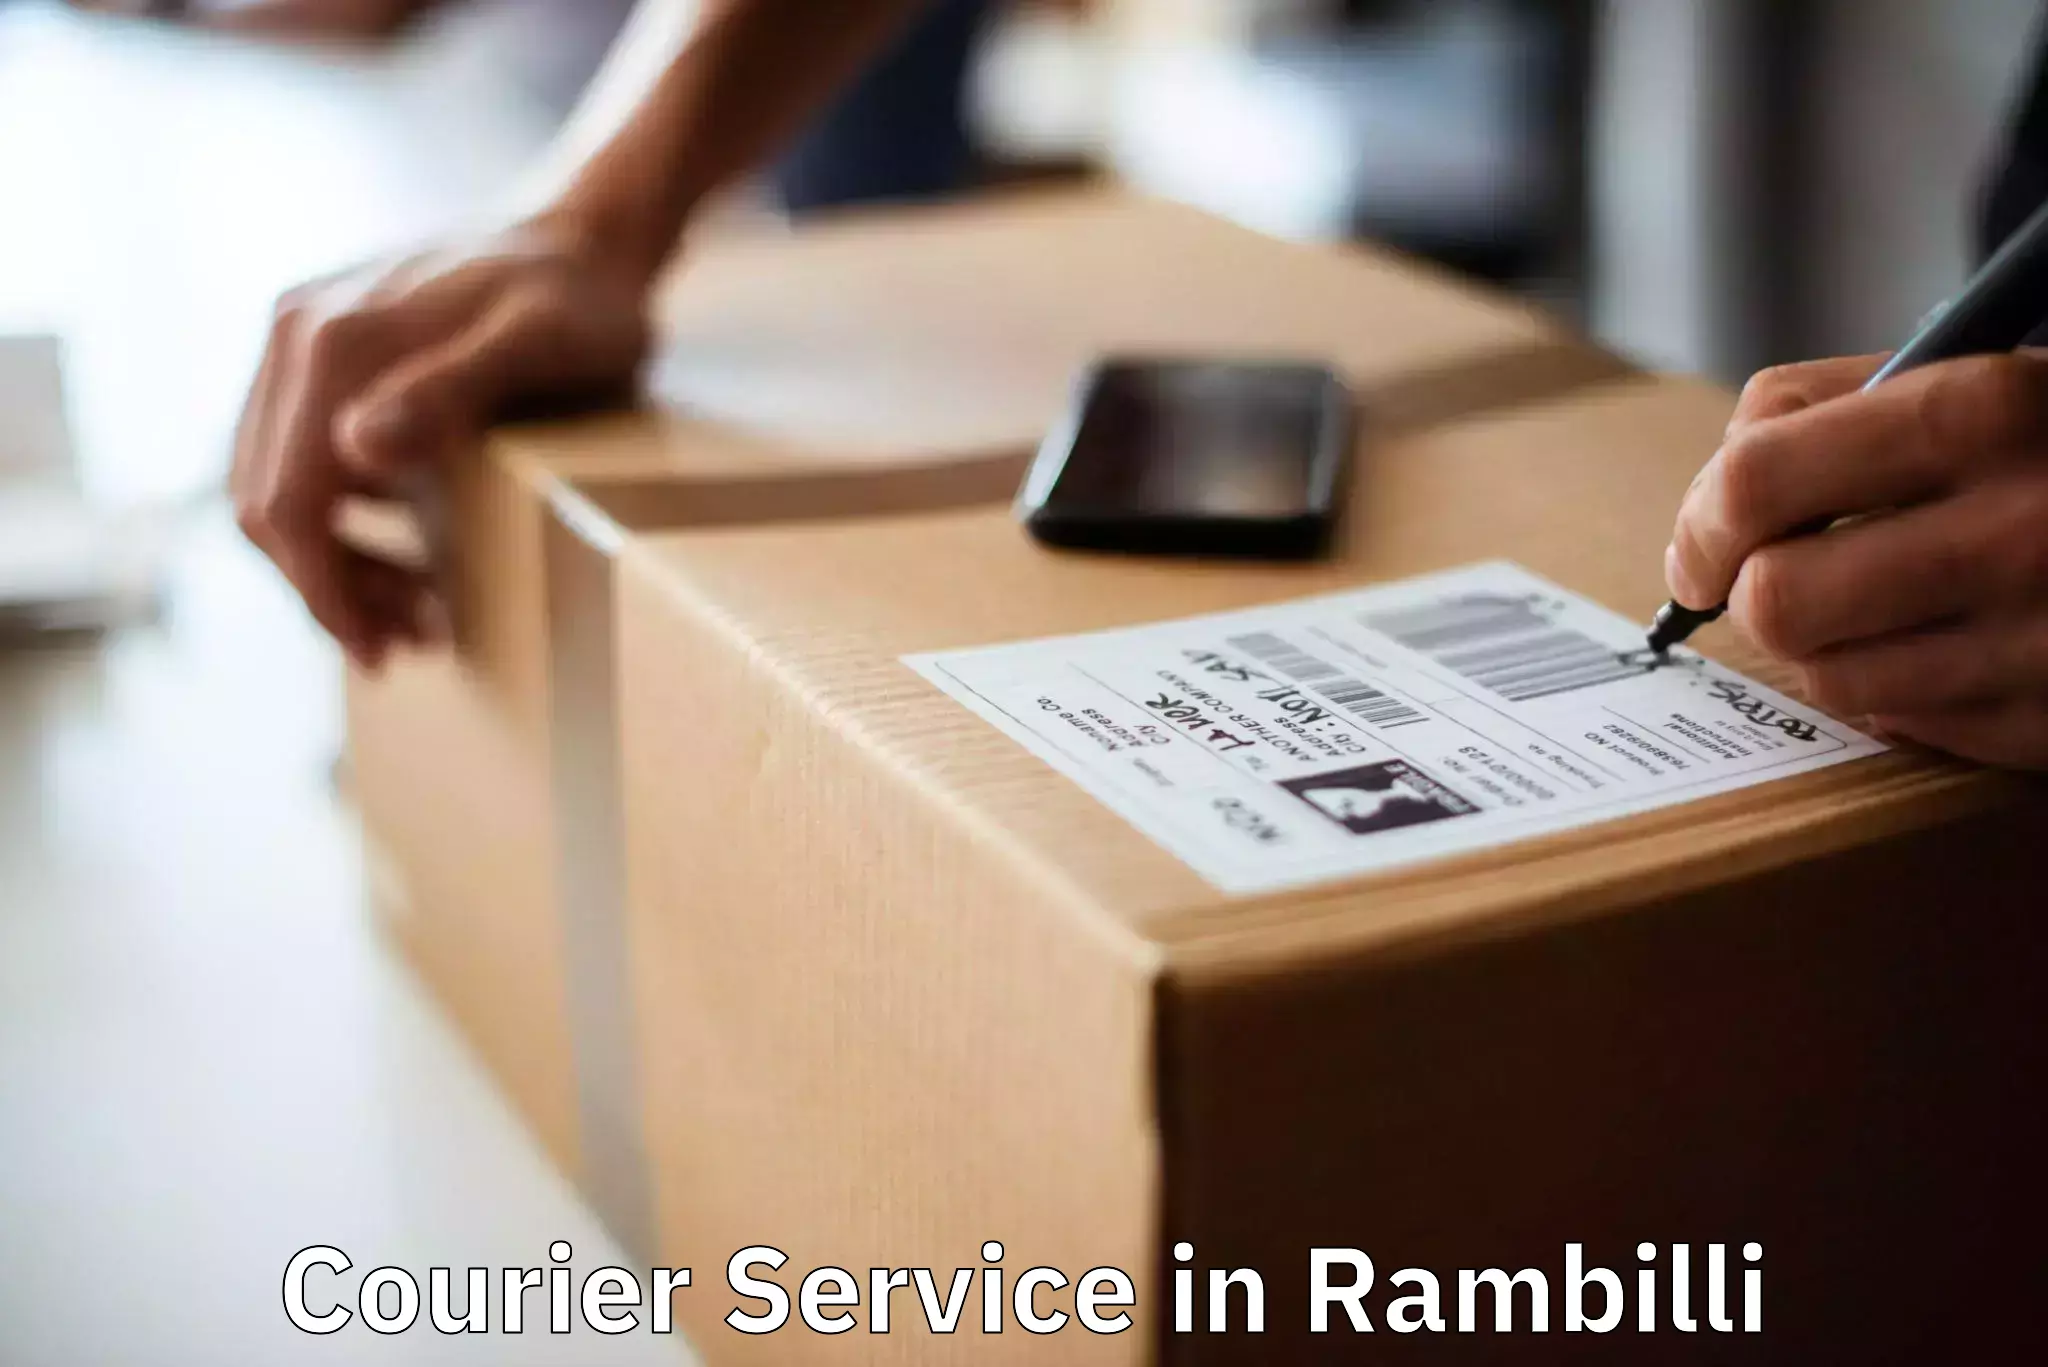 Innovative shipping solutions in Rambilli